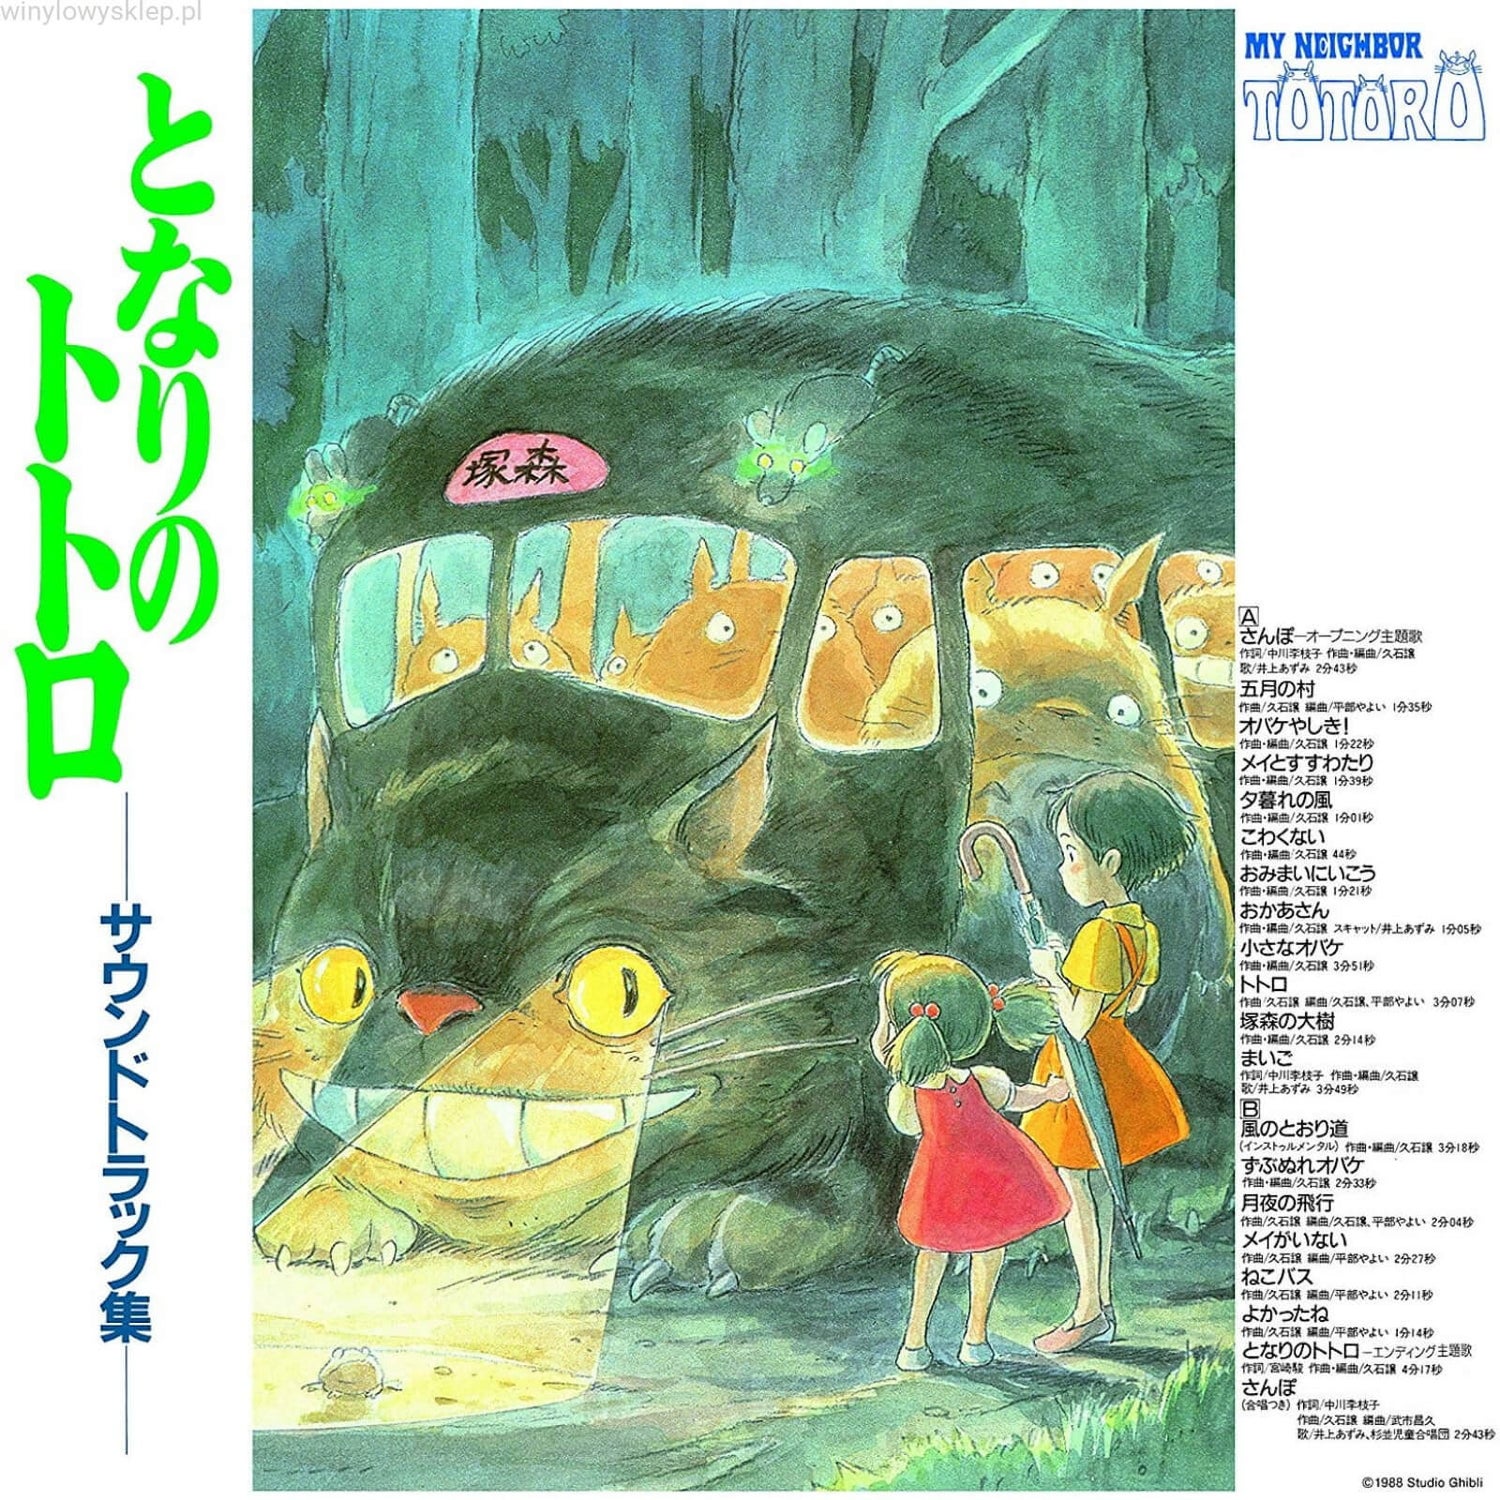 My Neighbor Totoro Soundtrack Vinyl